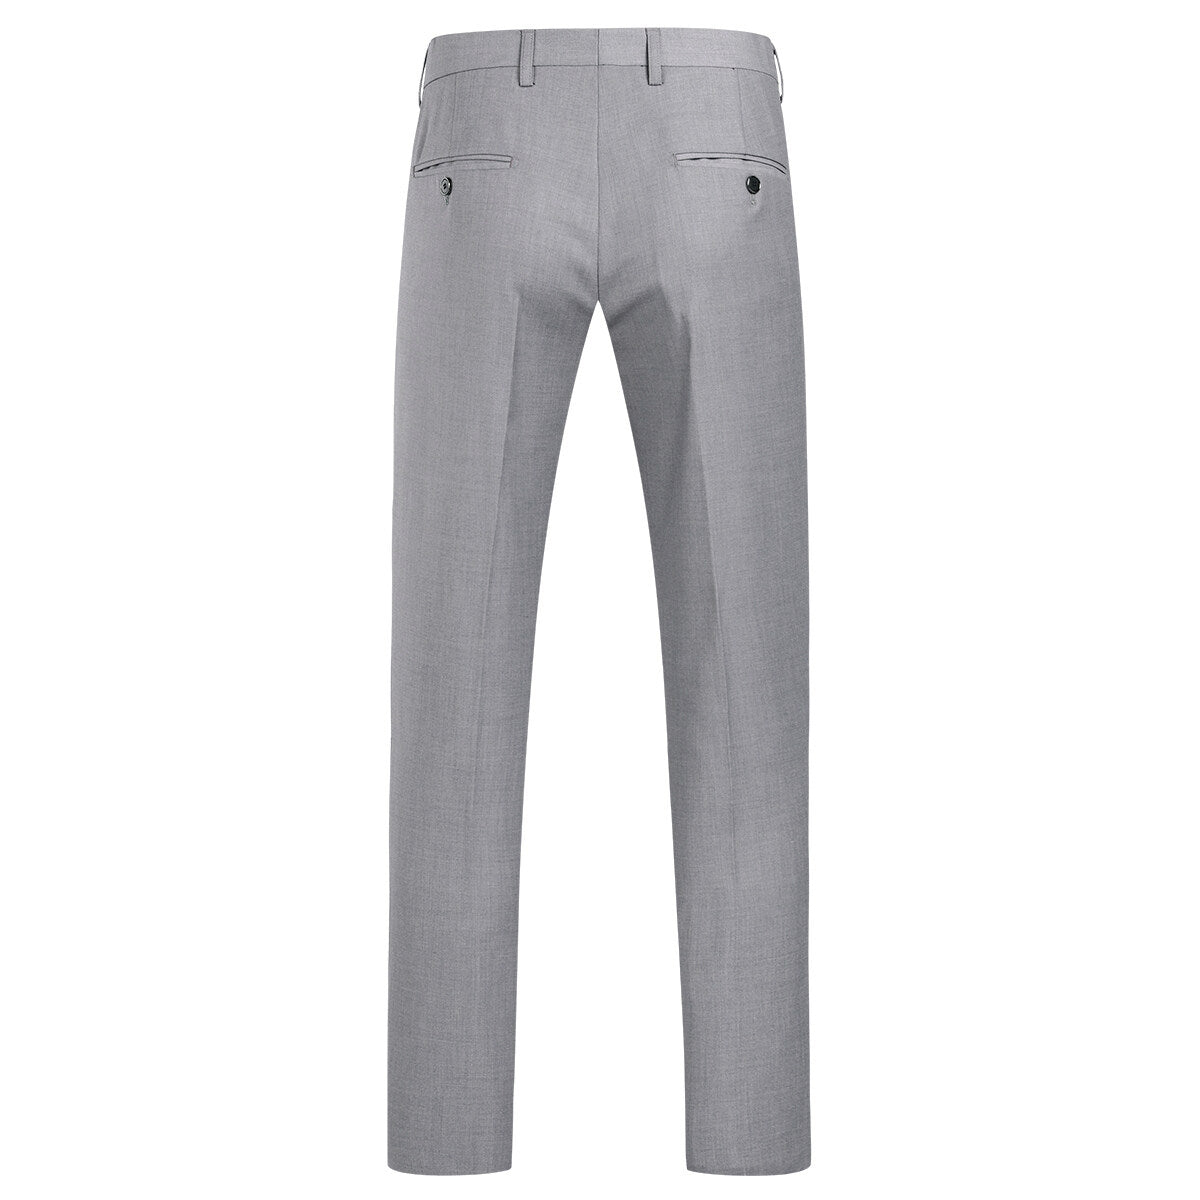 3-Piece Slim Fit One Button Fashion Gray Suit